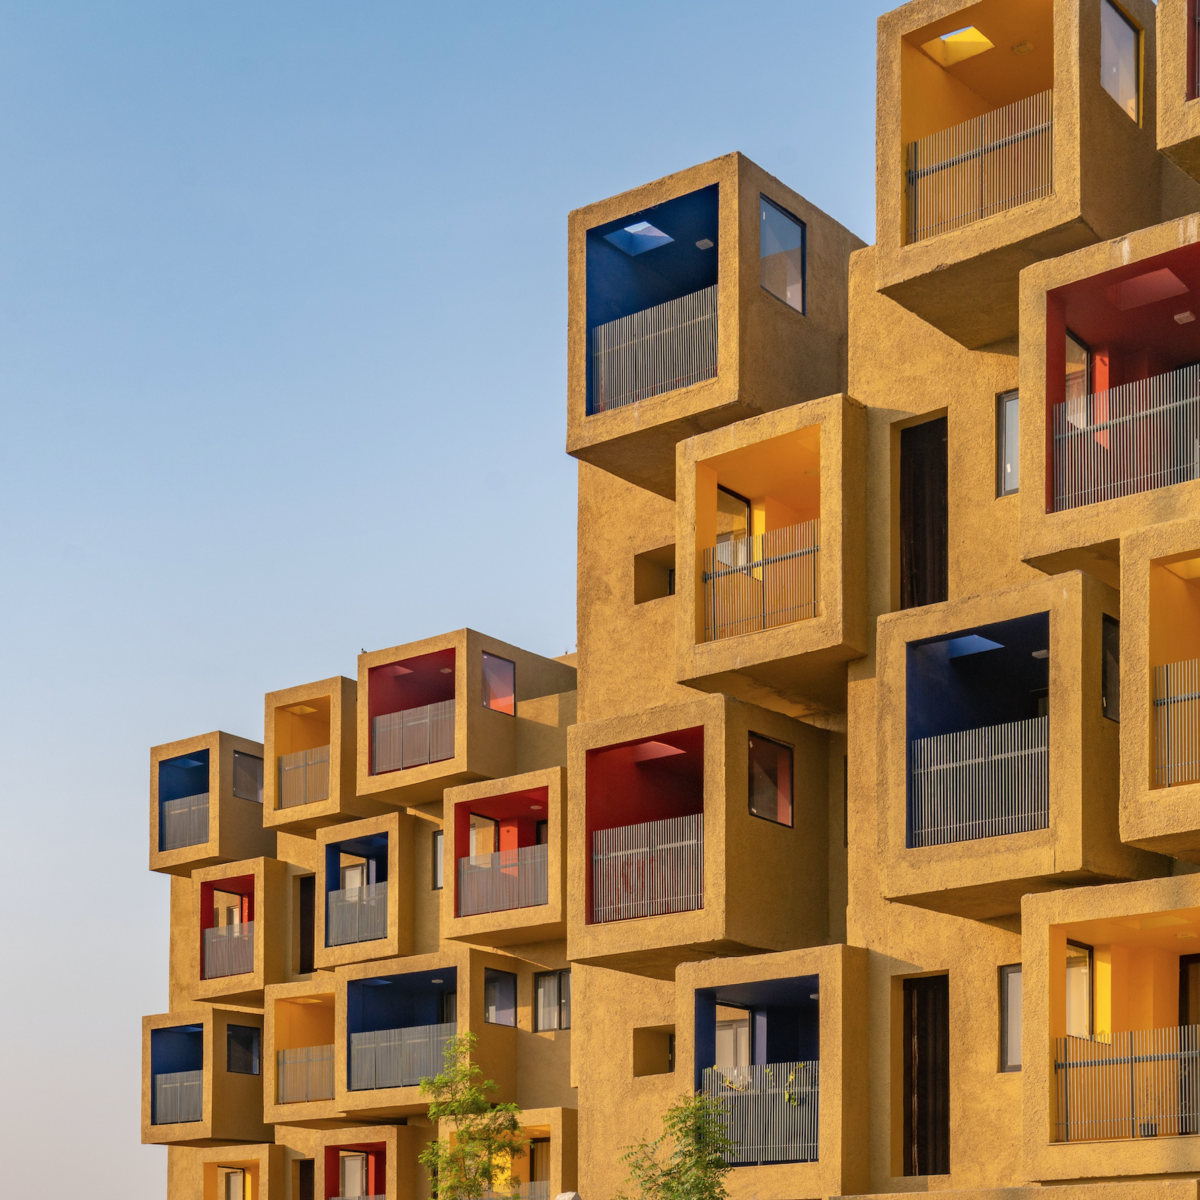 colour, housing blocks, cubic architecture, india, sanjay puri architects, india architecture, iconeye, ICON magazine